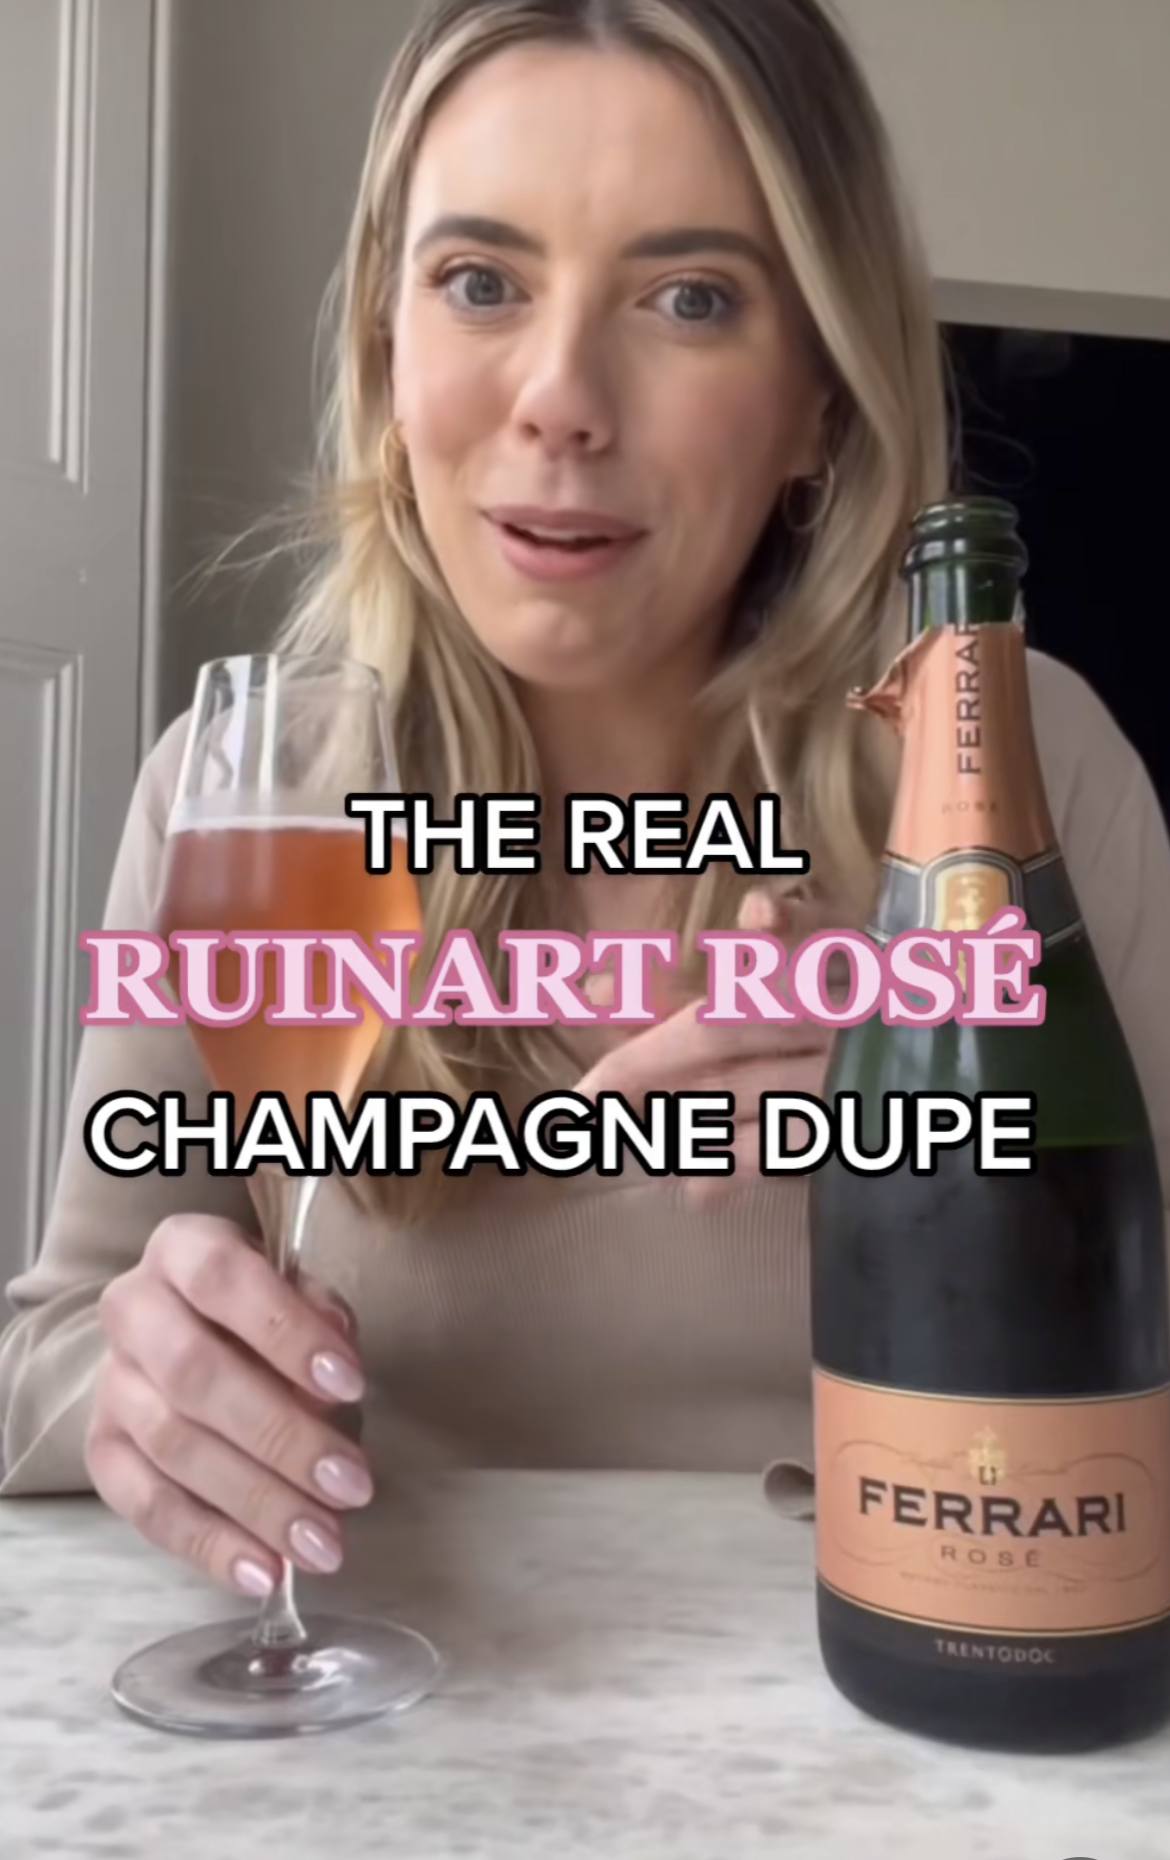 Ruinart Rosé Champagne Dupe